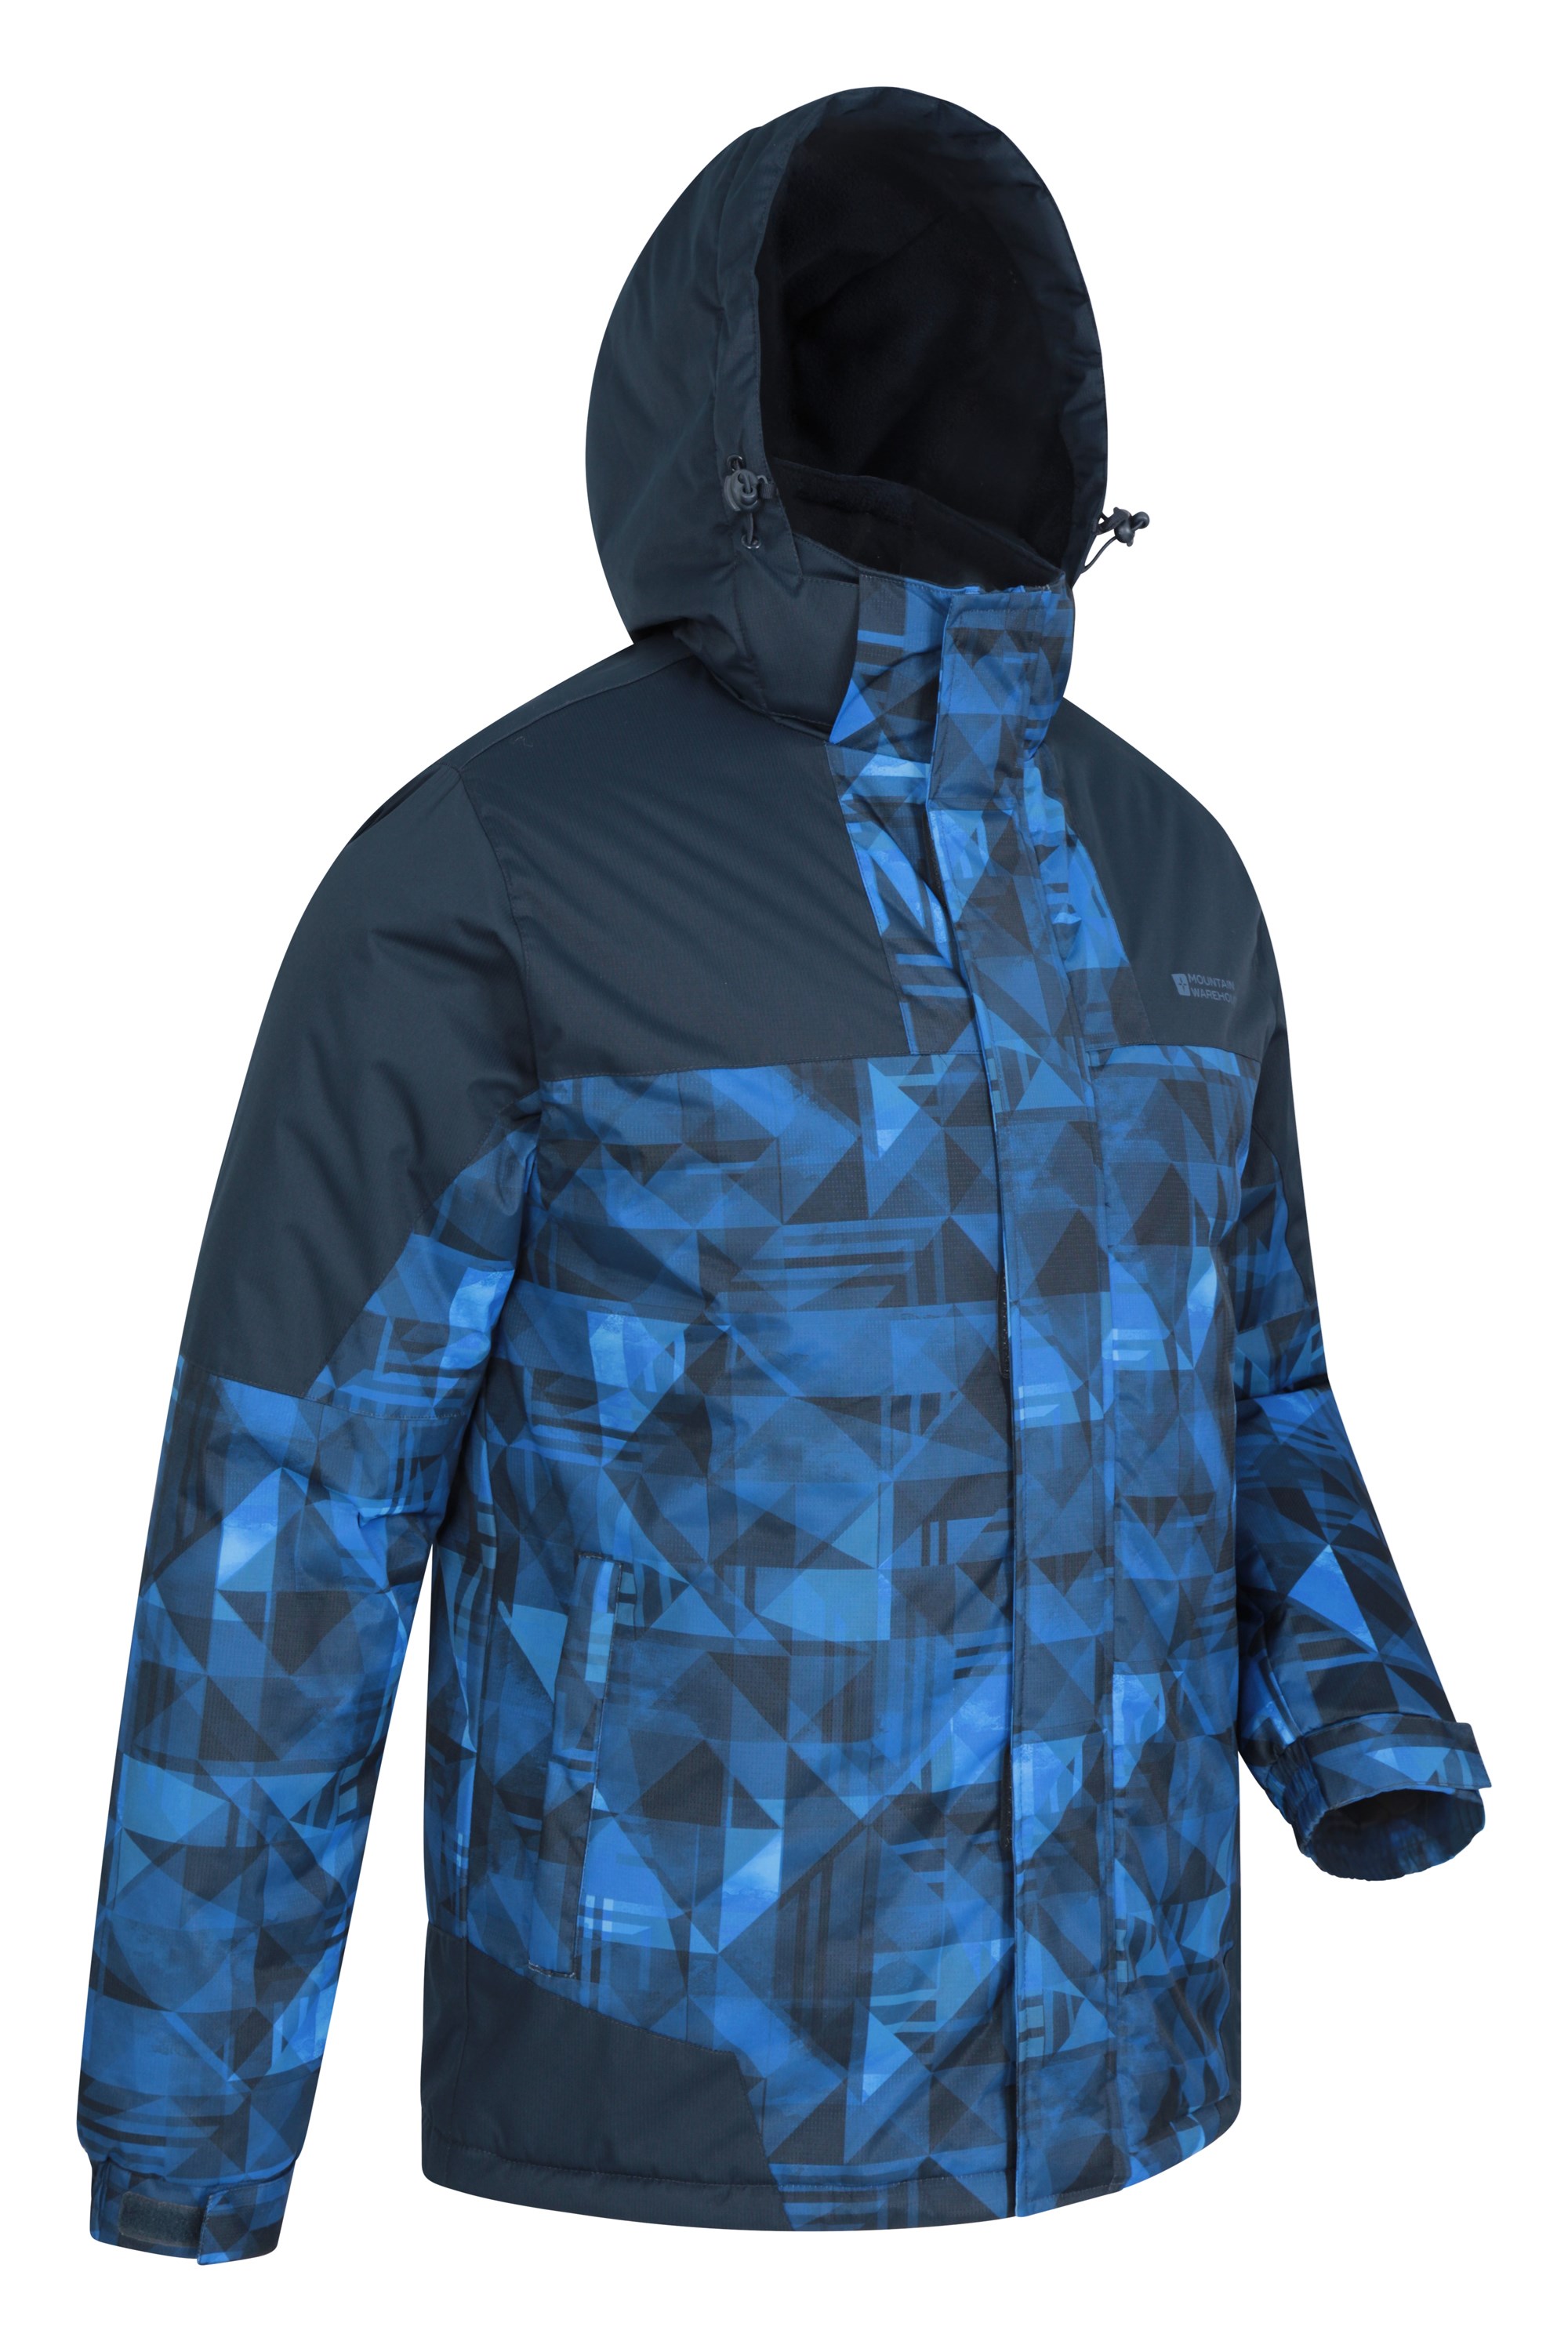 Mountain Warehouse Mens Snowproof Ski Jacket Fleece Lined Insulated Winter Coat 